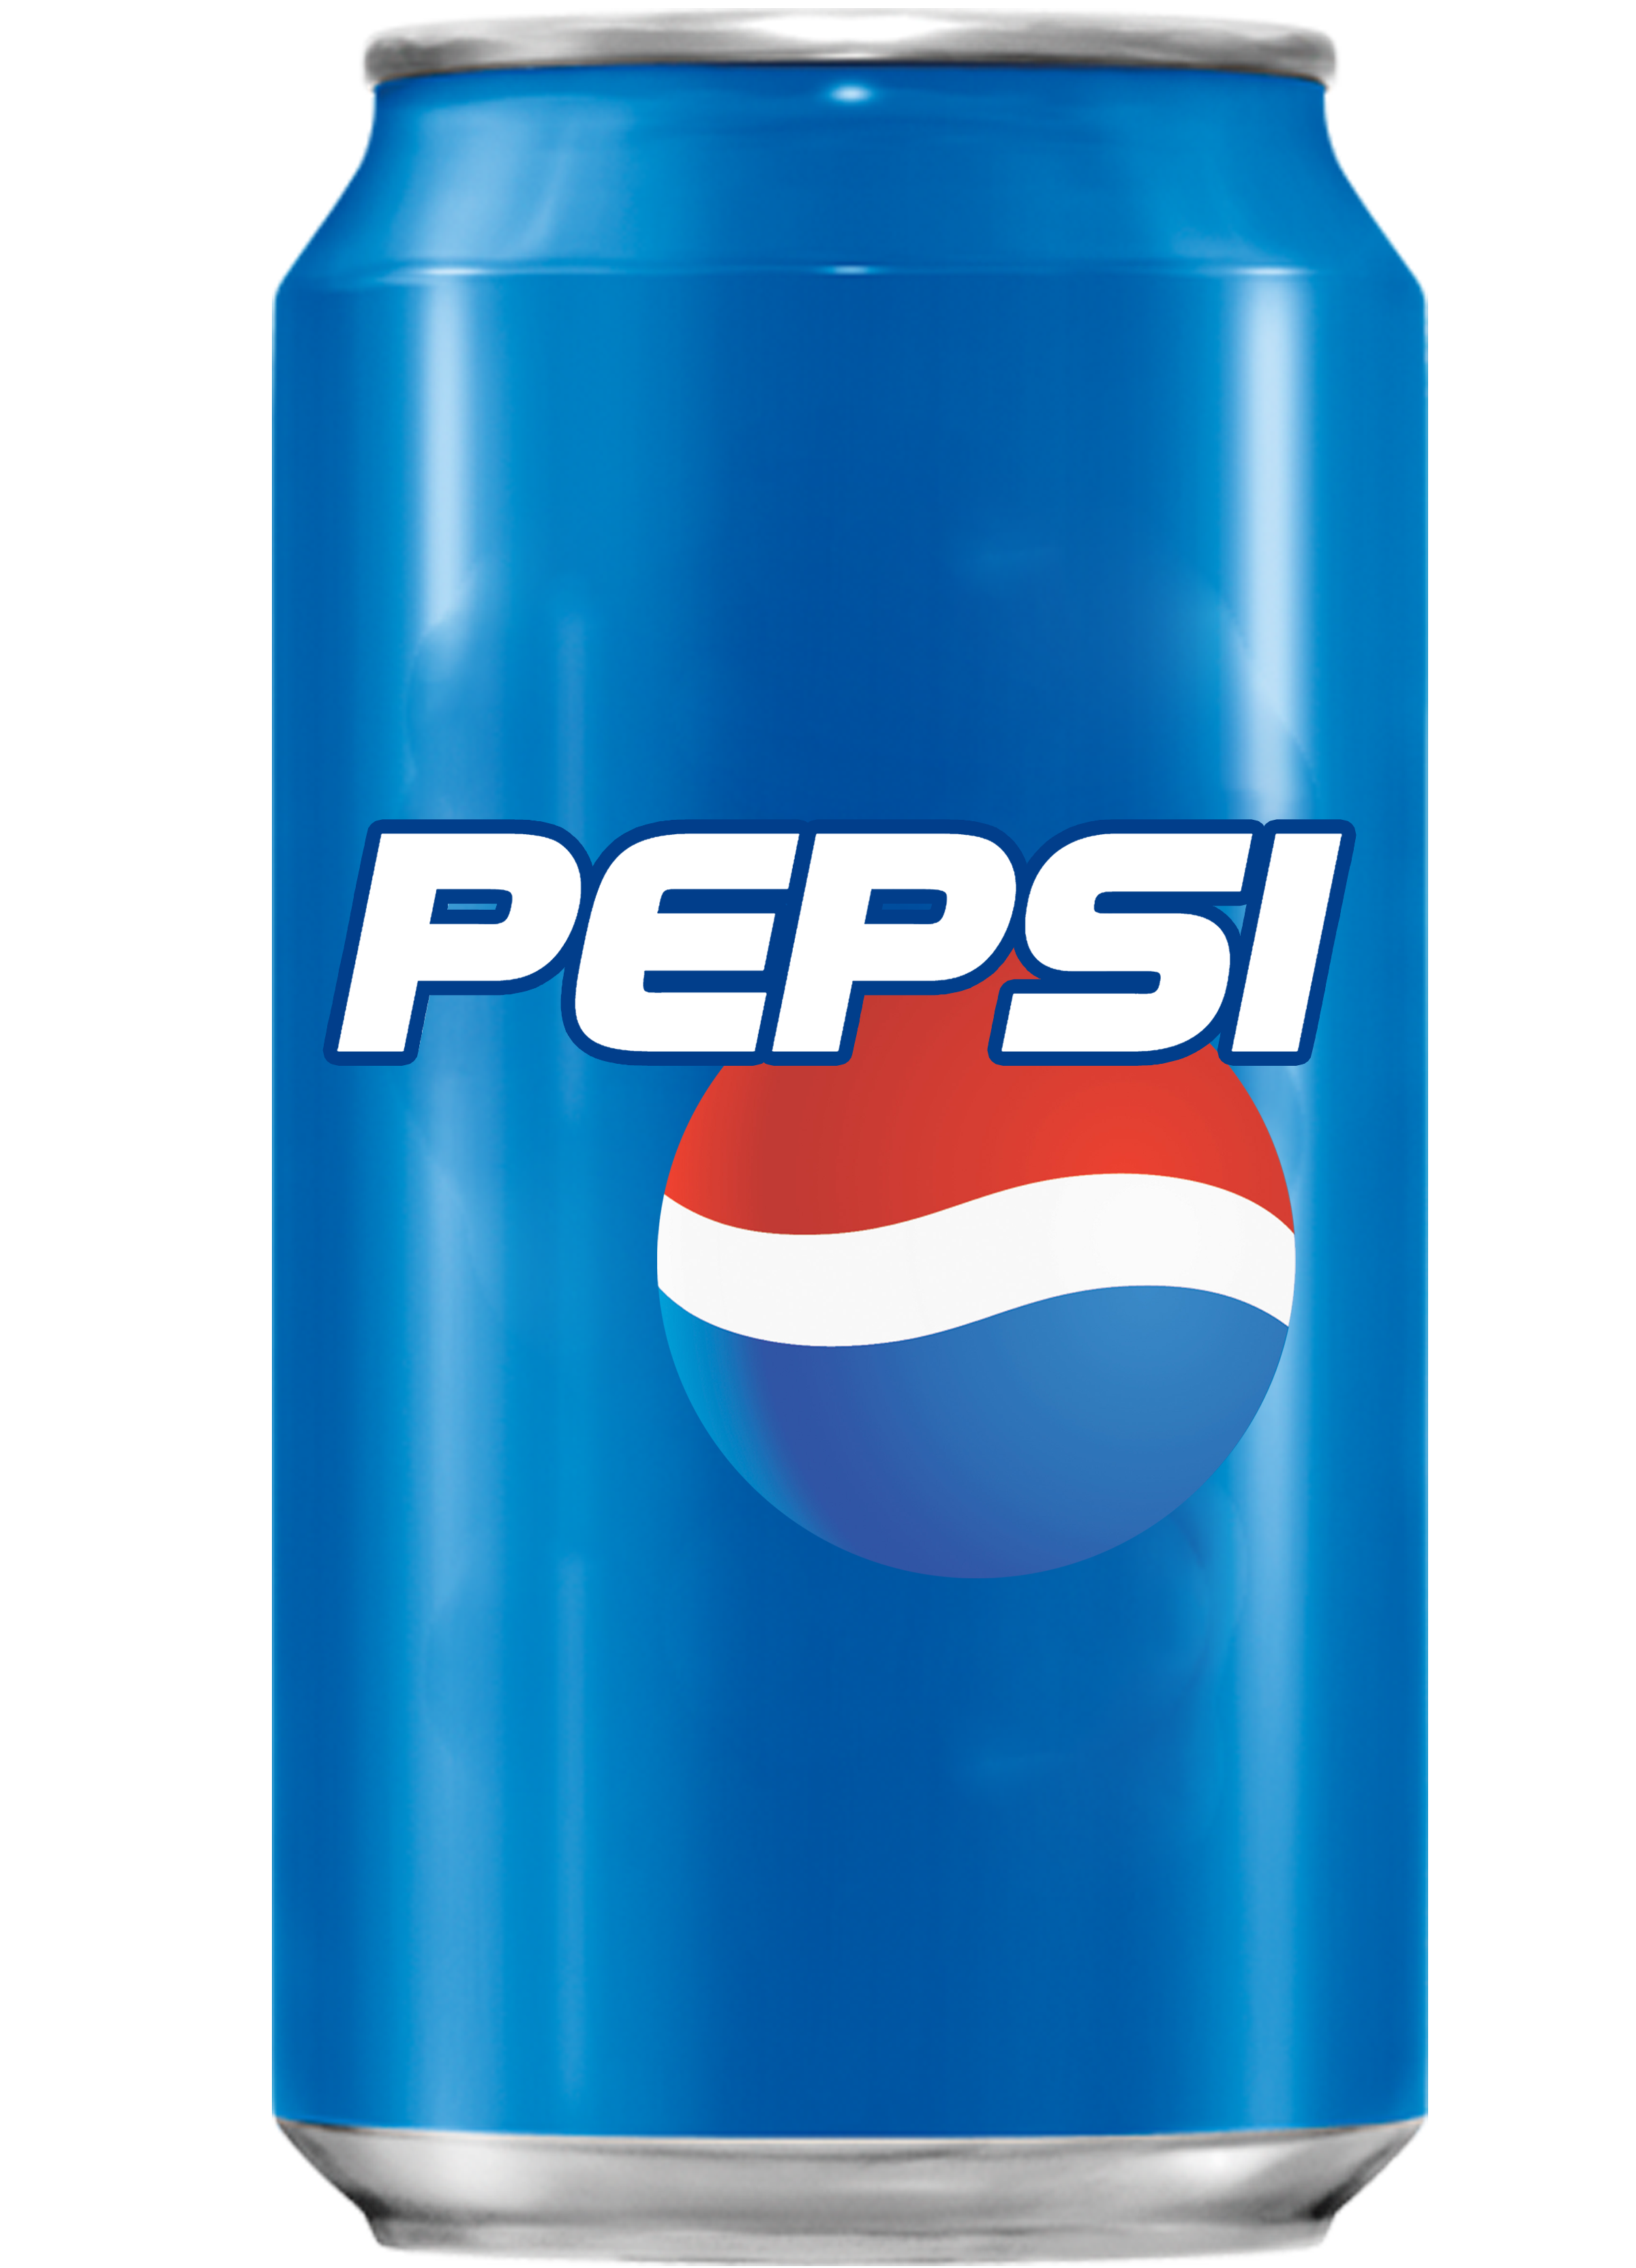 Pepsi PNG Transparent Image